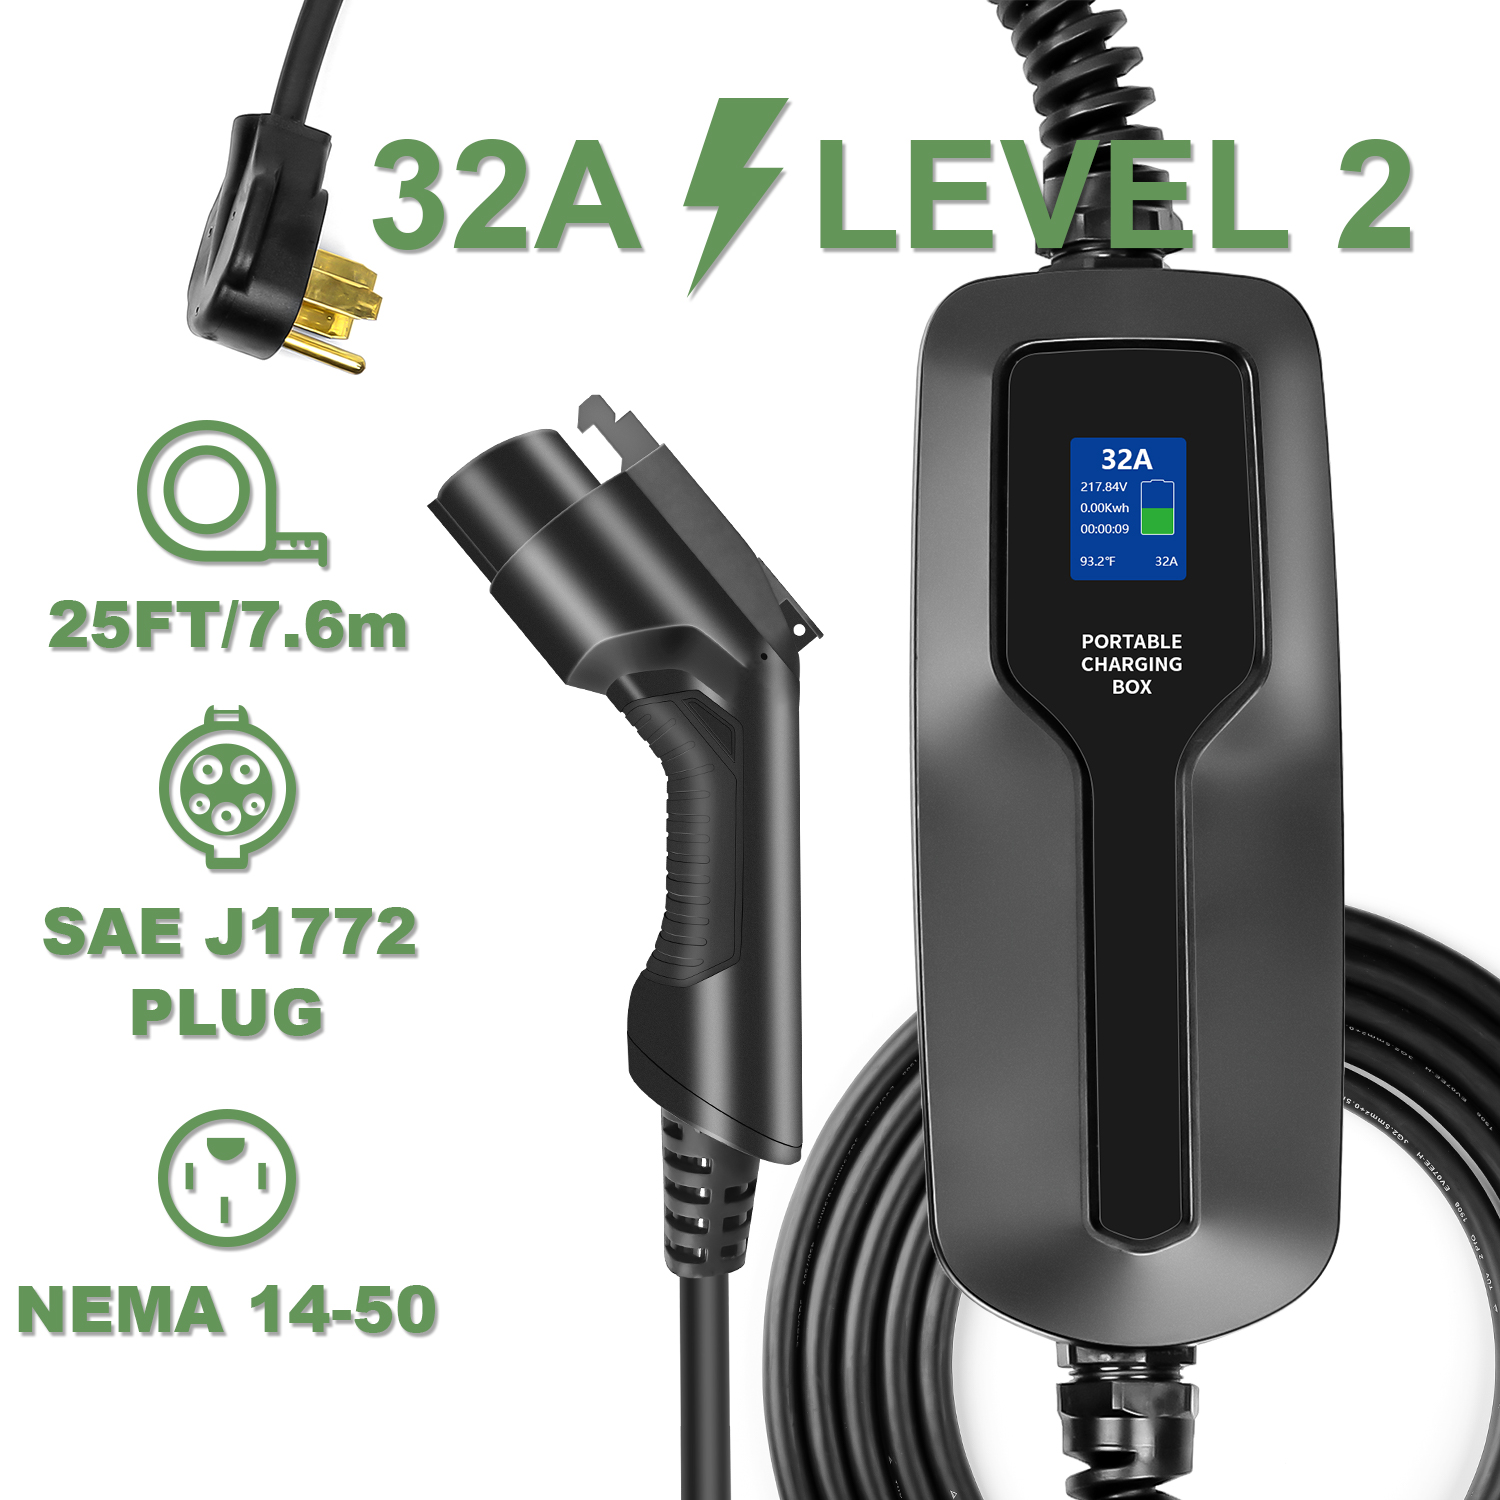 Portable EV Charger Level 2 with NEMA 14-50 Plug